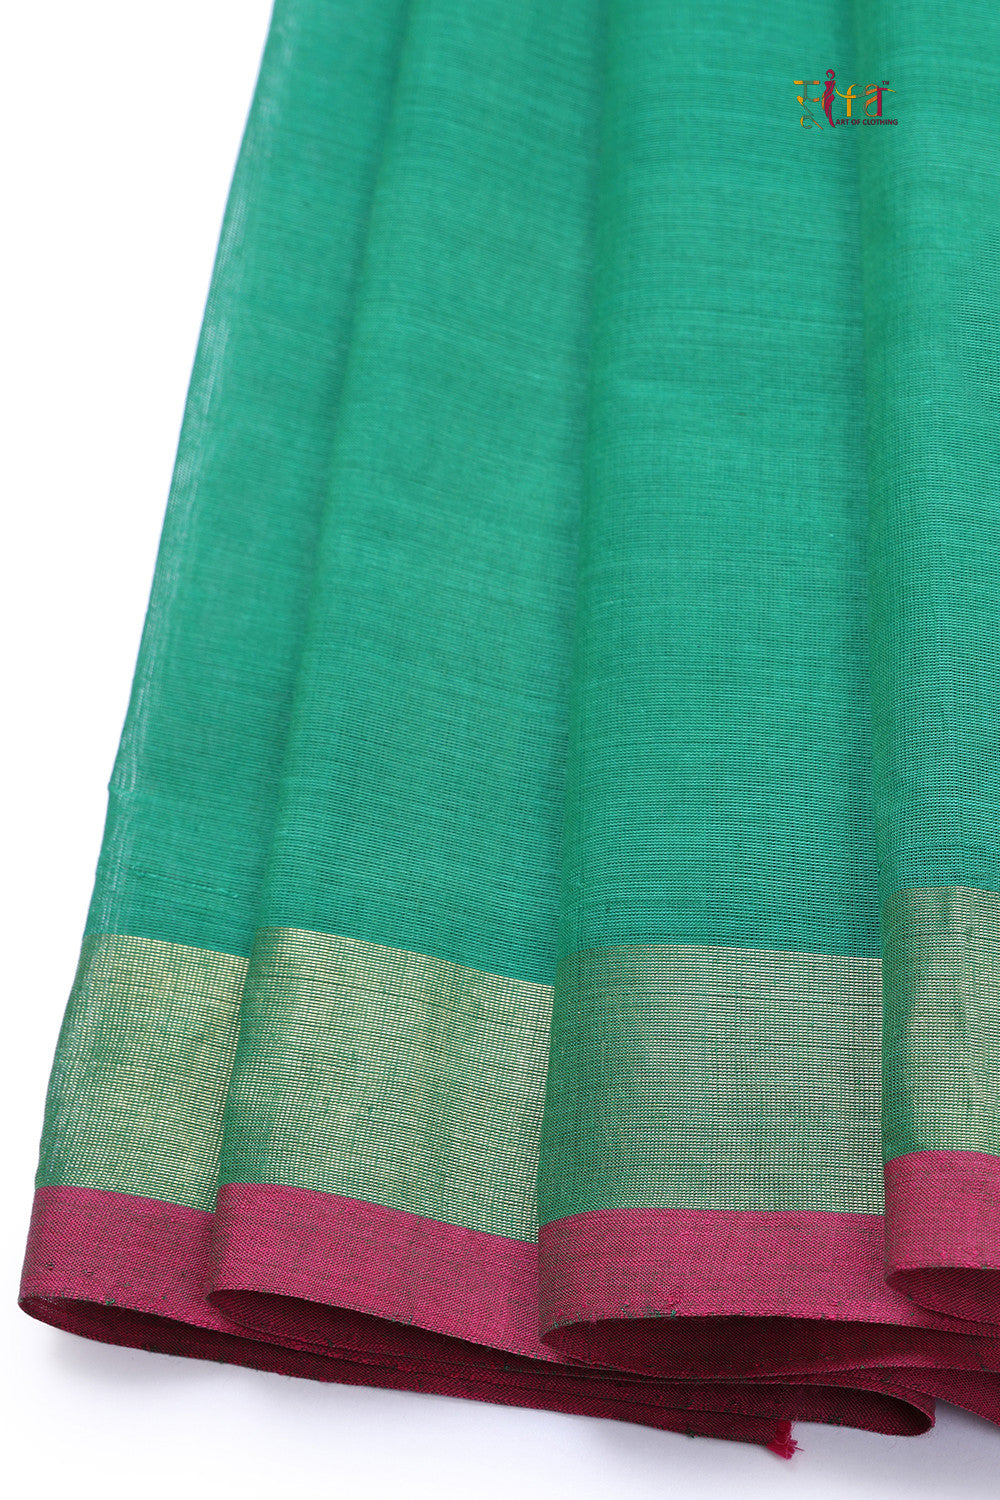 Green Handloom Kanchi Cotton Saree